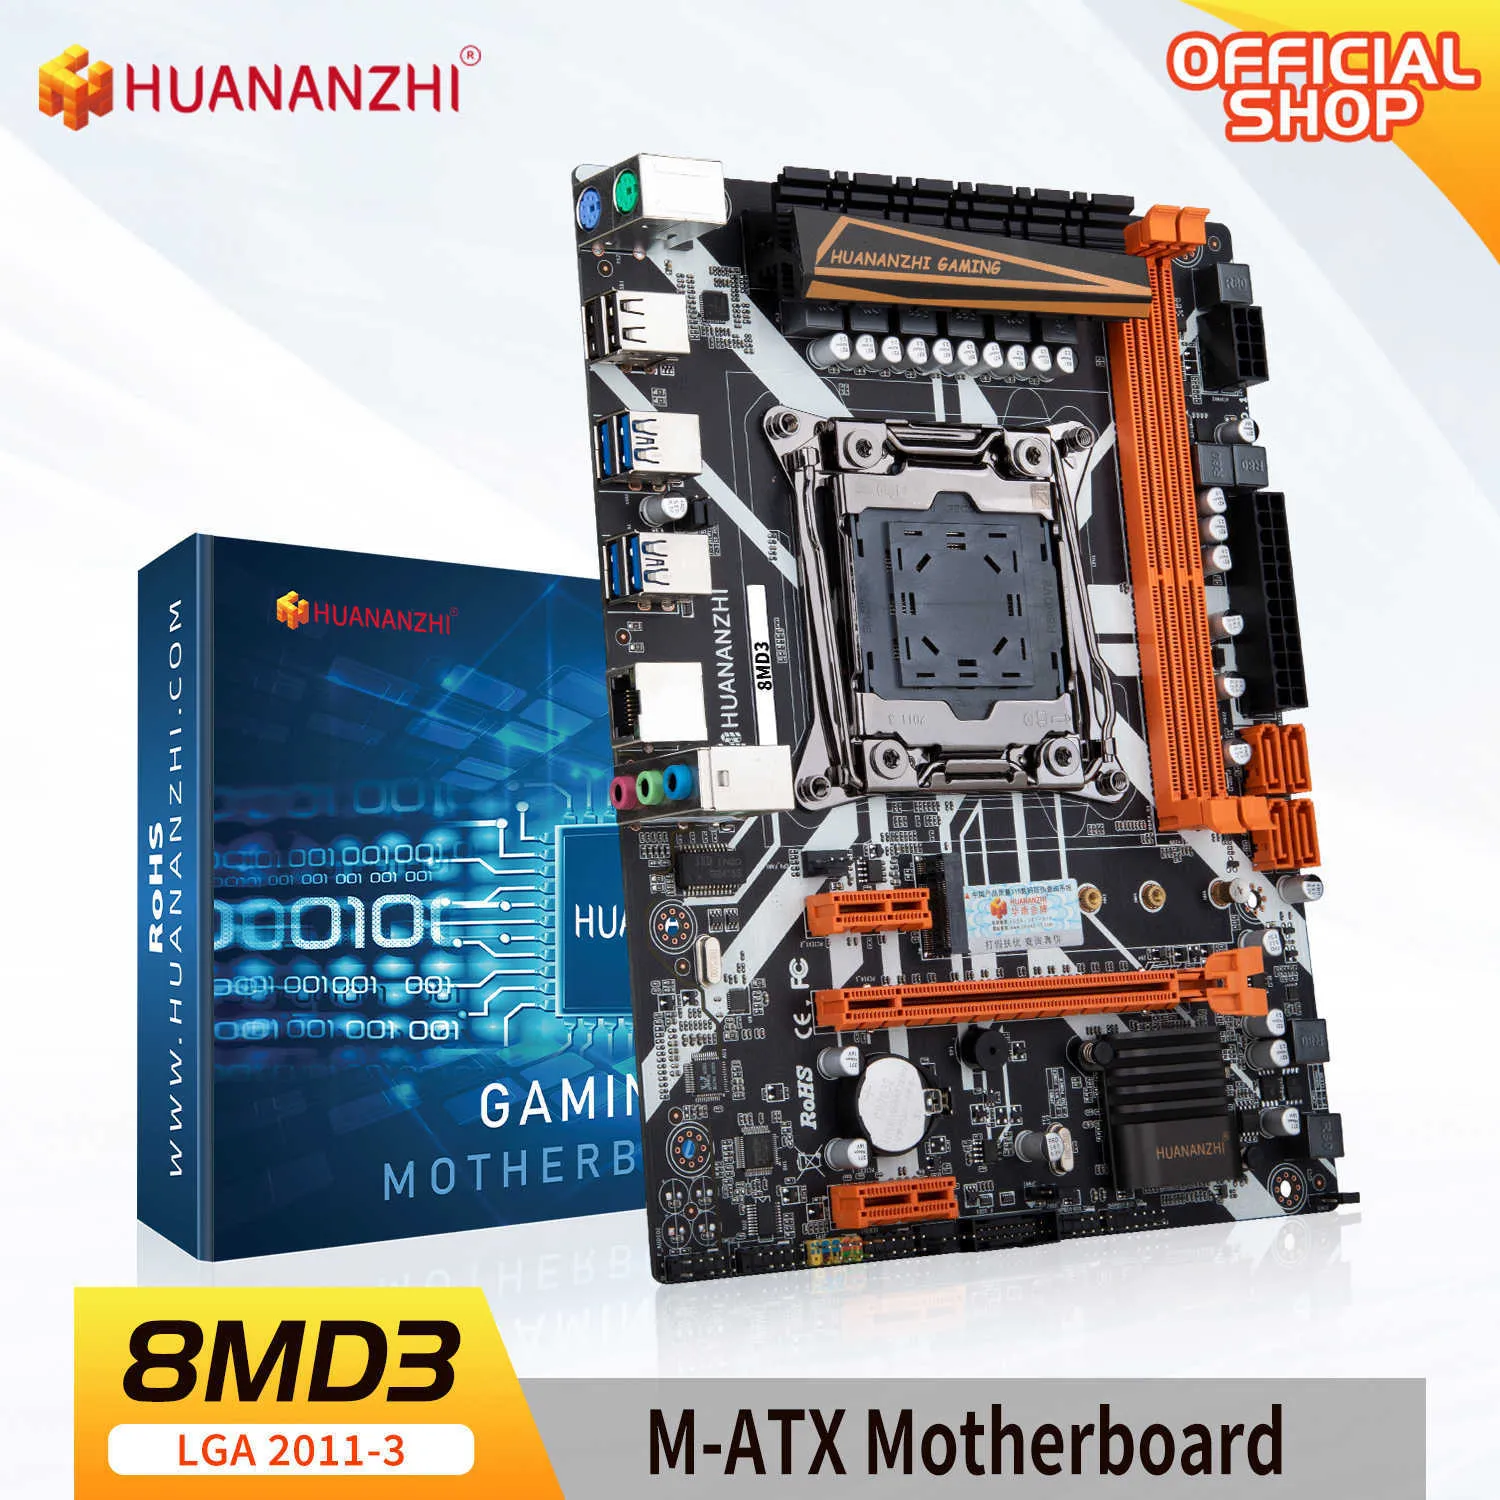 Huananzhi 8M D3 LGA 2011-3 Moderkort Intel Xeon E5 2696 2678 2676 2673 2666 V3 DDR3 RECC Nonecc Memory NVME USB3.0 ATX